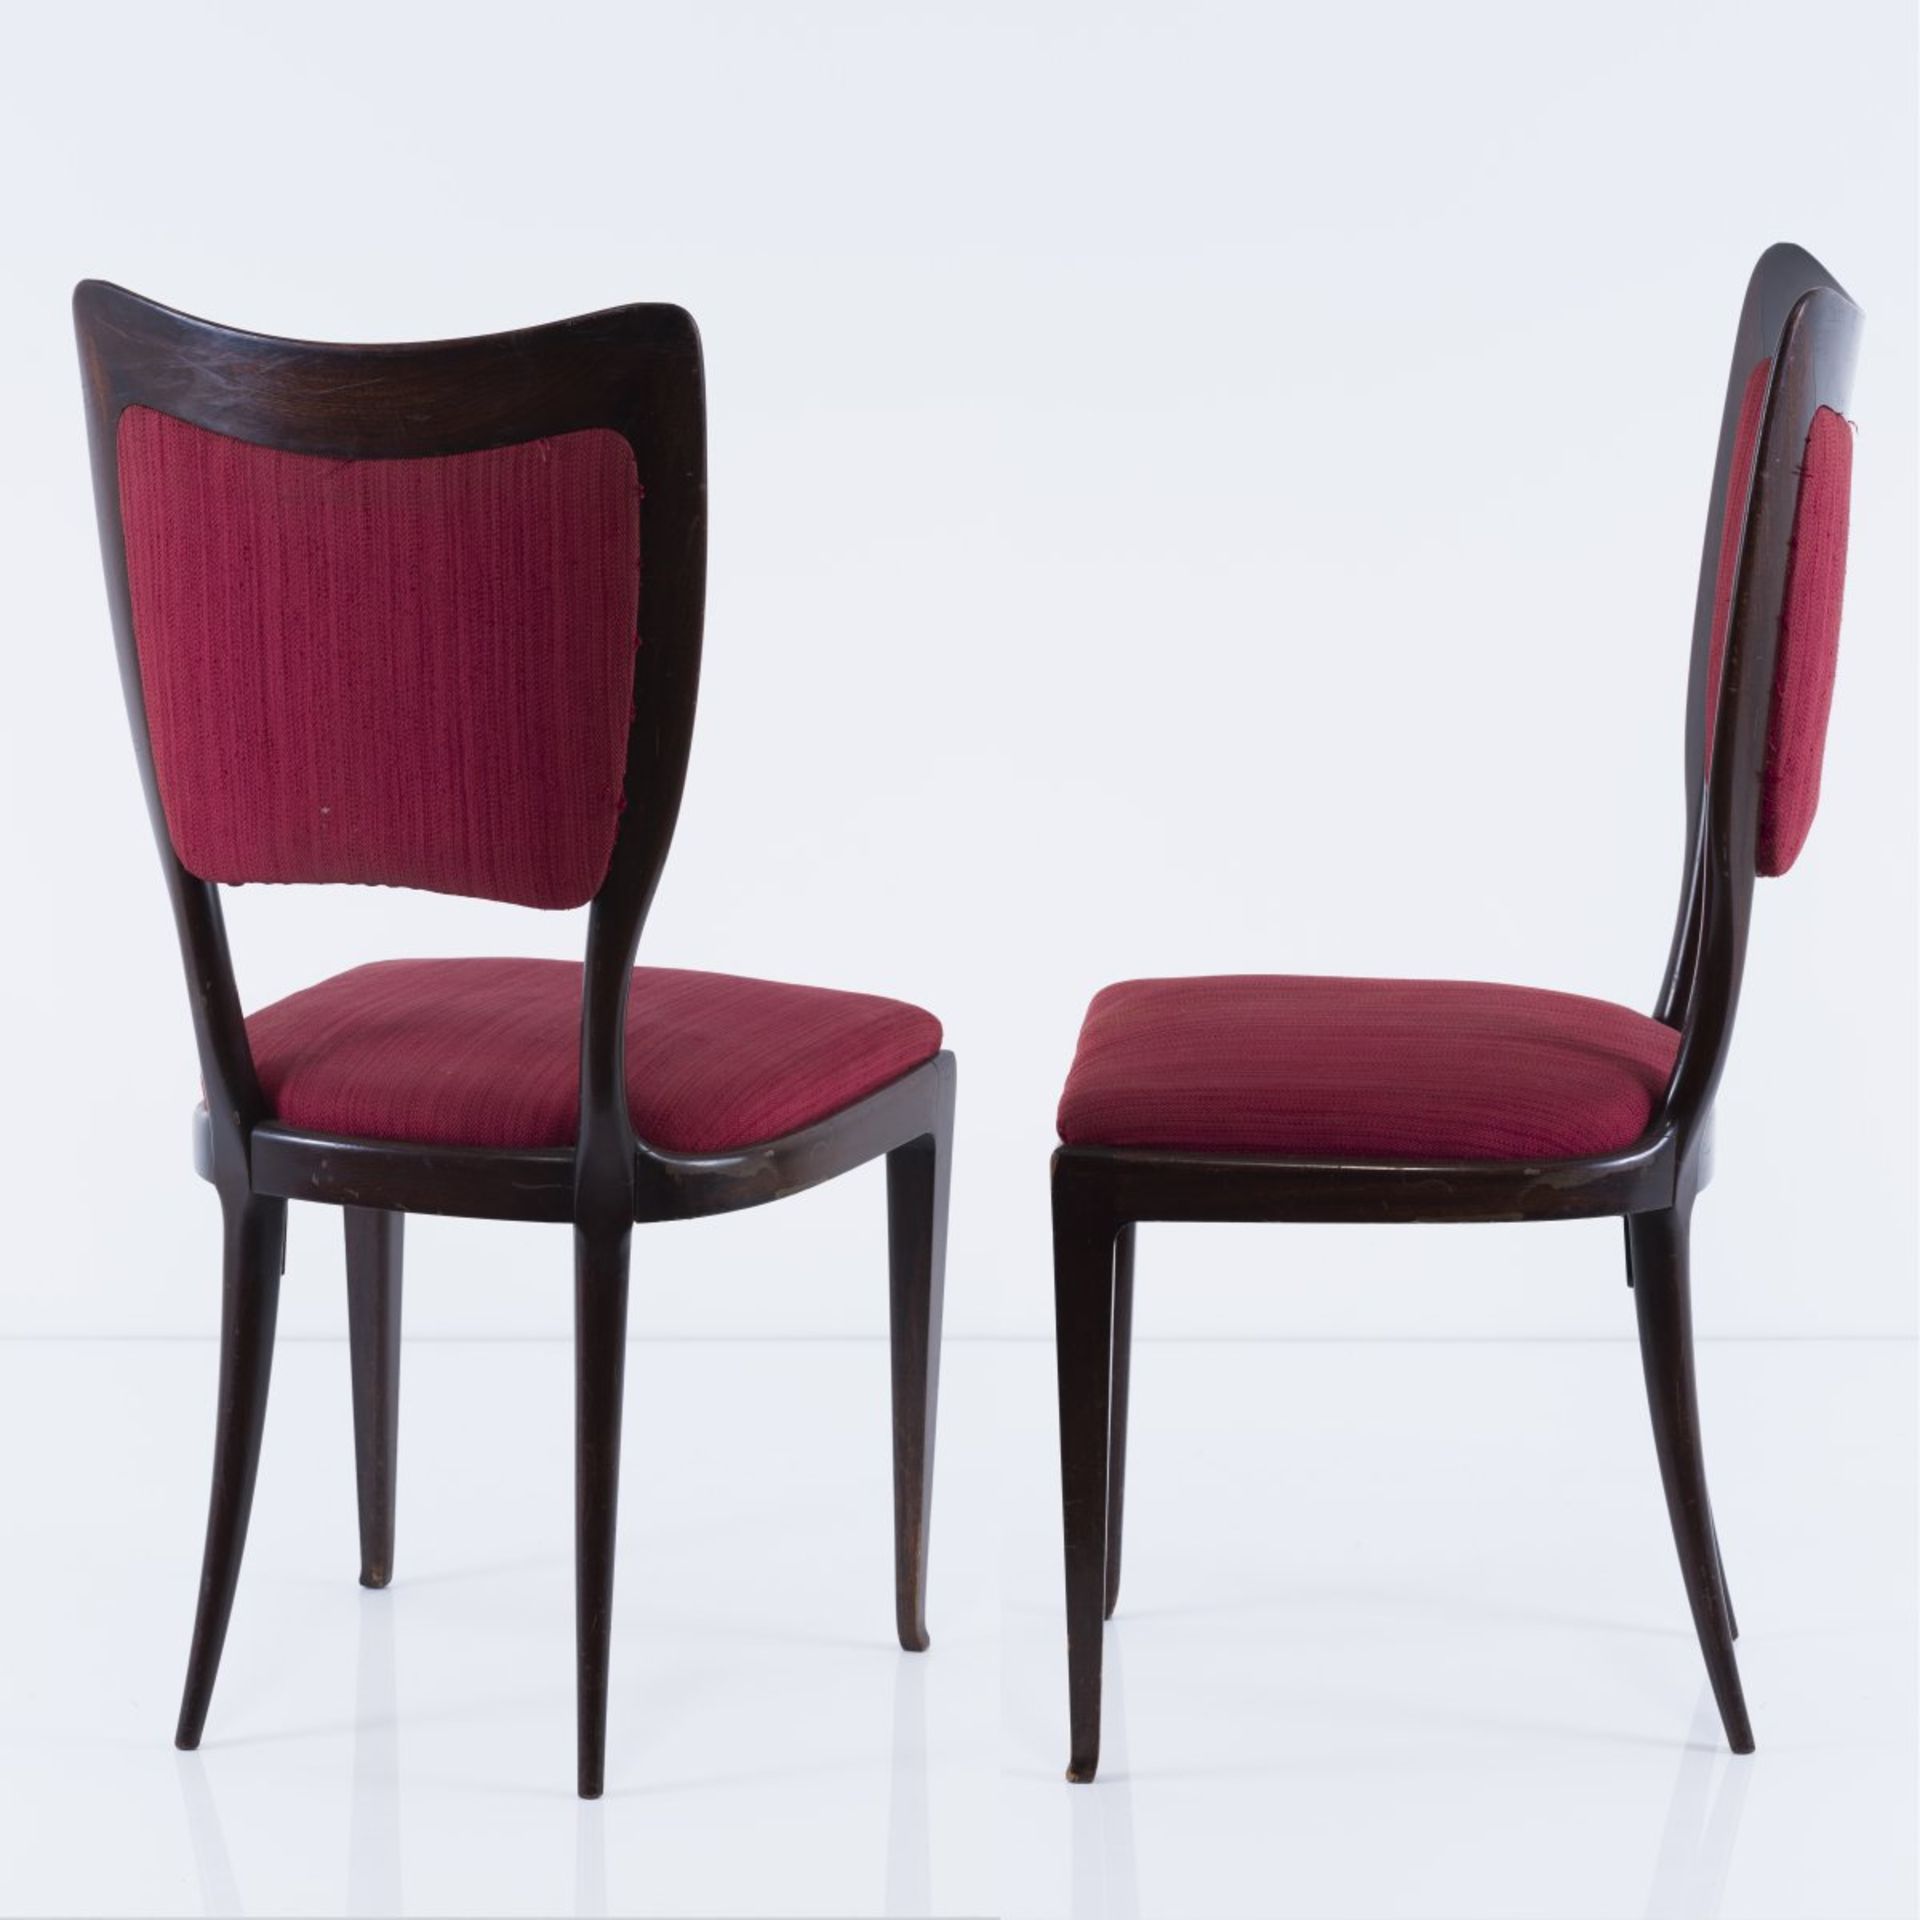 Paolo Buffa, Zwei Stühle, um 1949 - Image 3 of 5